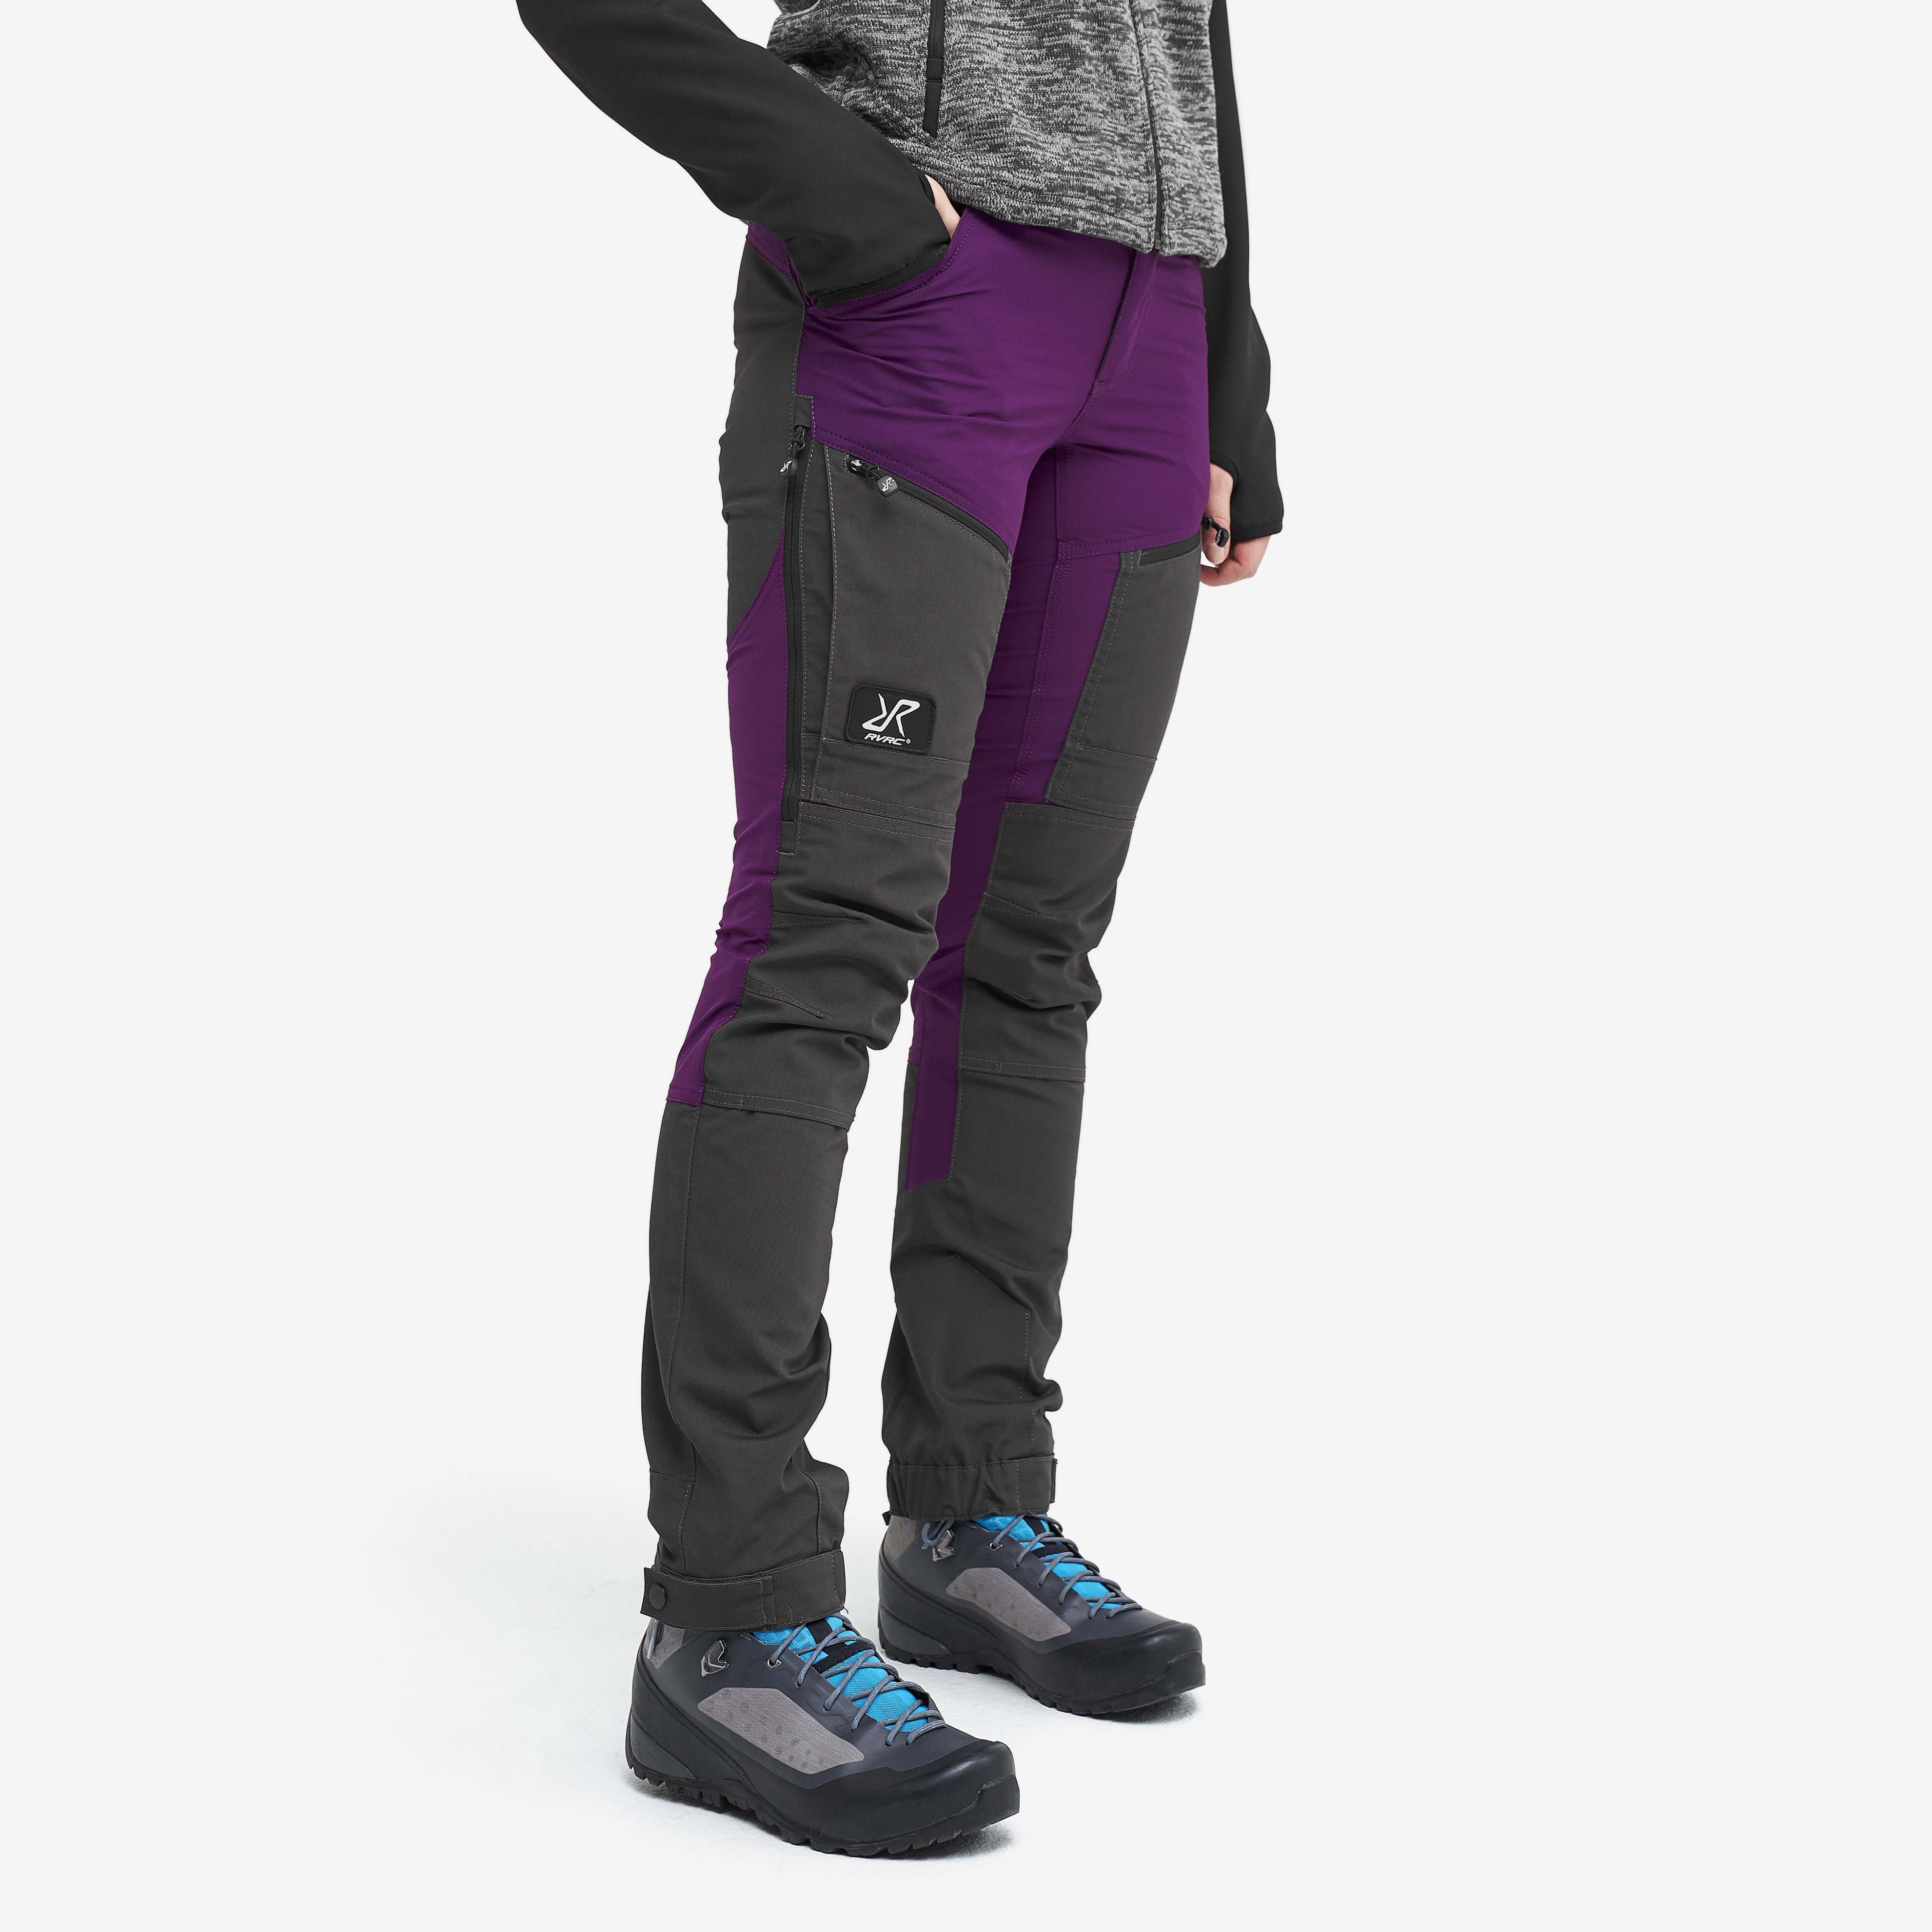 RVRC GP Pro hiking trousers for women in purple